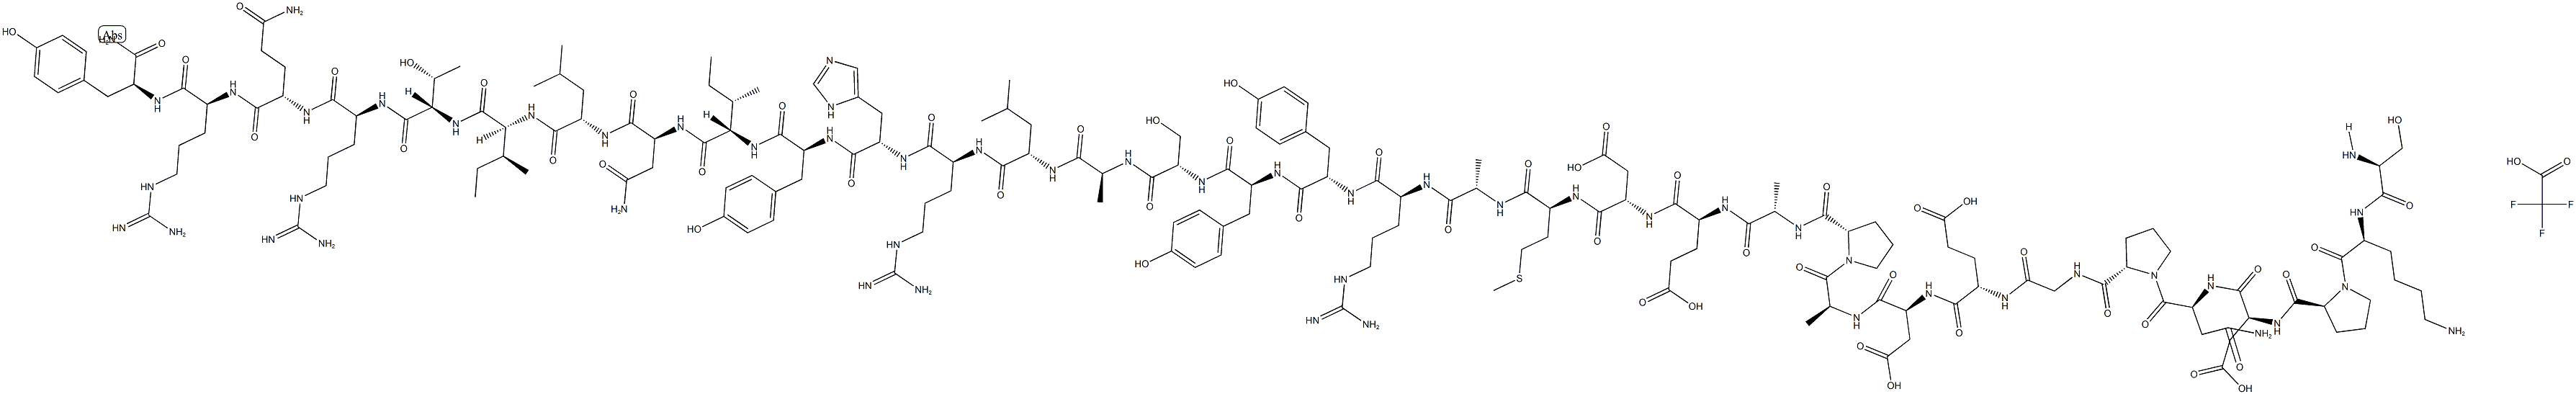 Neuropeptide Y (3-36) (human, rat) (trifluoroacetate salt) 结构式